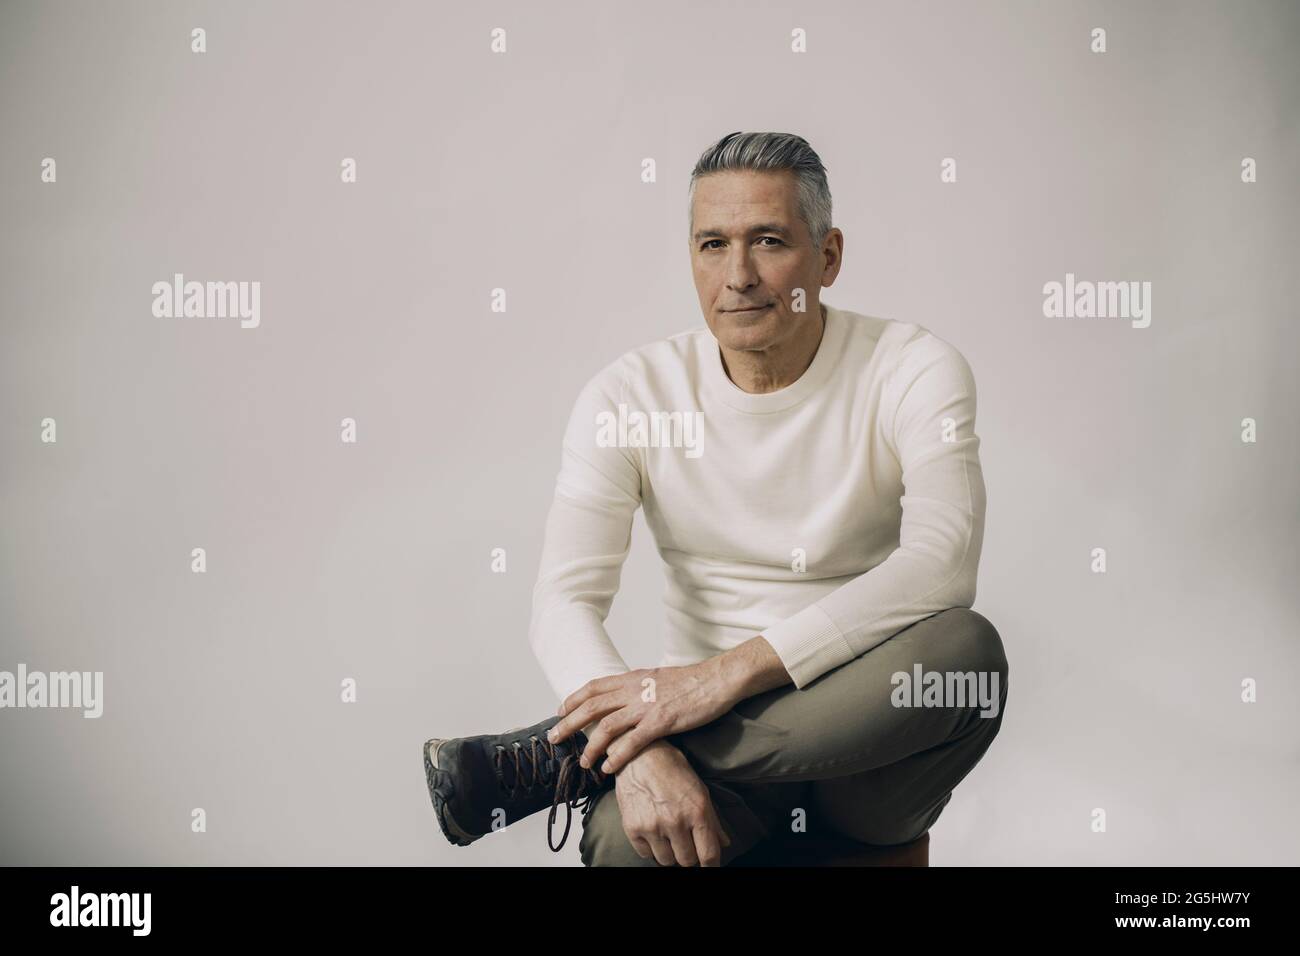 Full length portrait of mature man sitting against white background Stock Photo